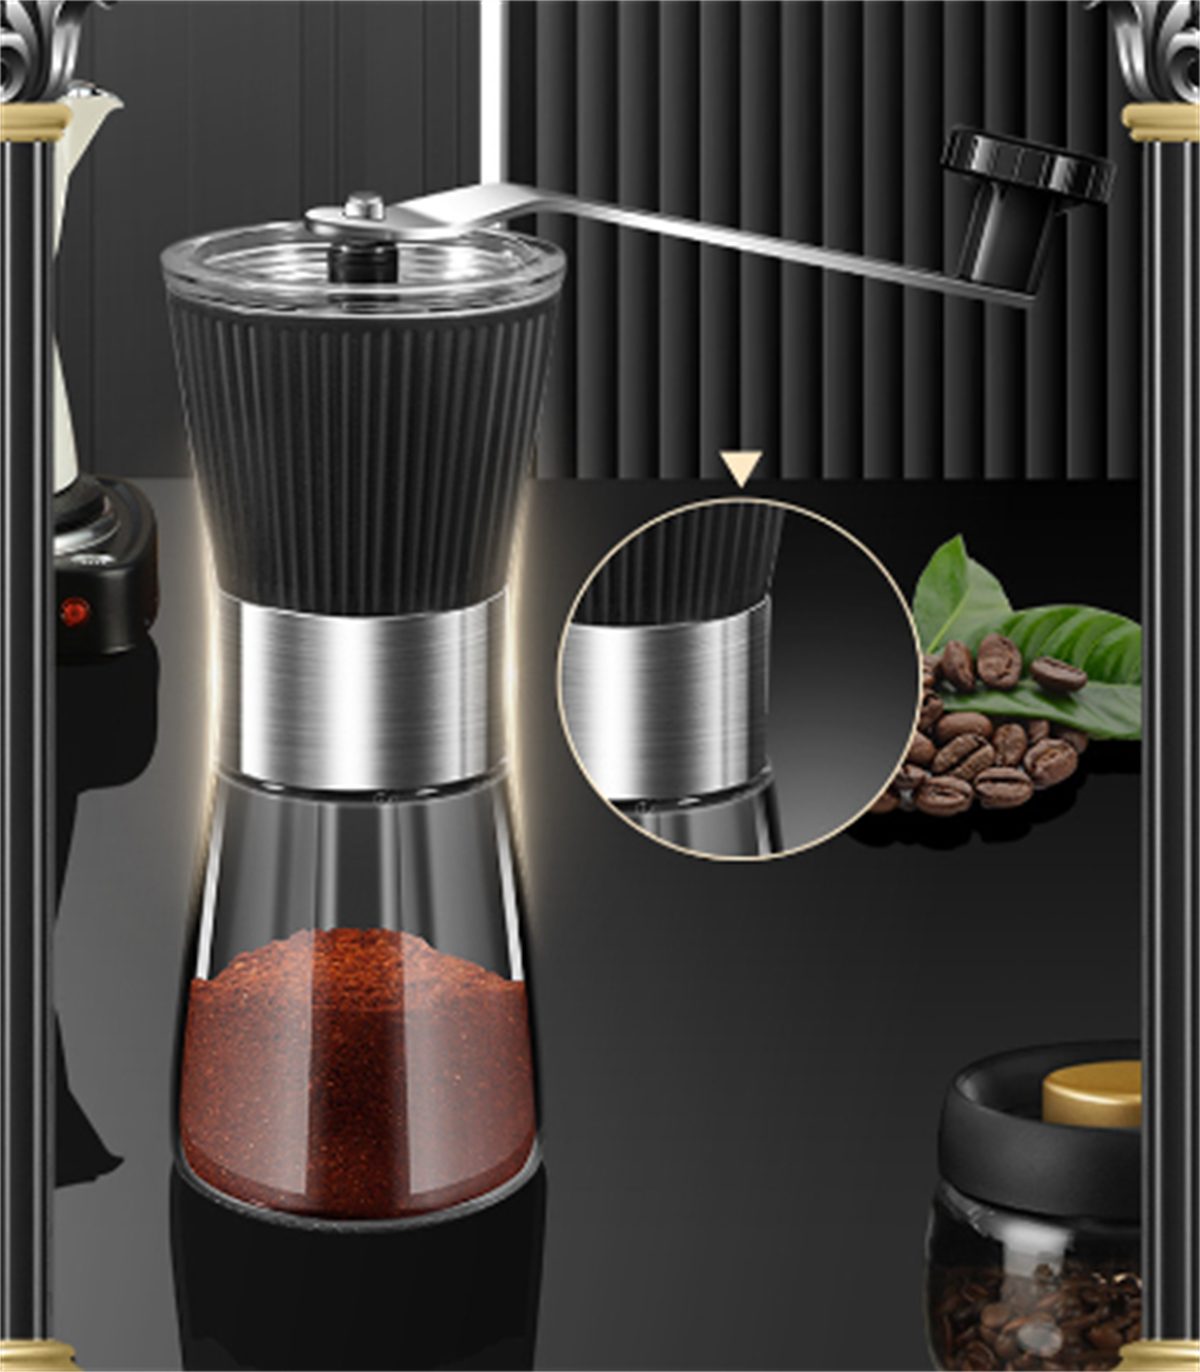 Mahlstärke Filterkaffeemaschine und Manuelle Kaffeemühle großer mit carefully selected einstellbarer Kapazität